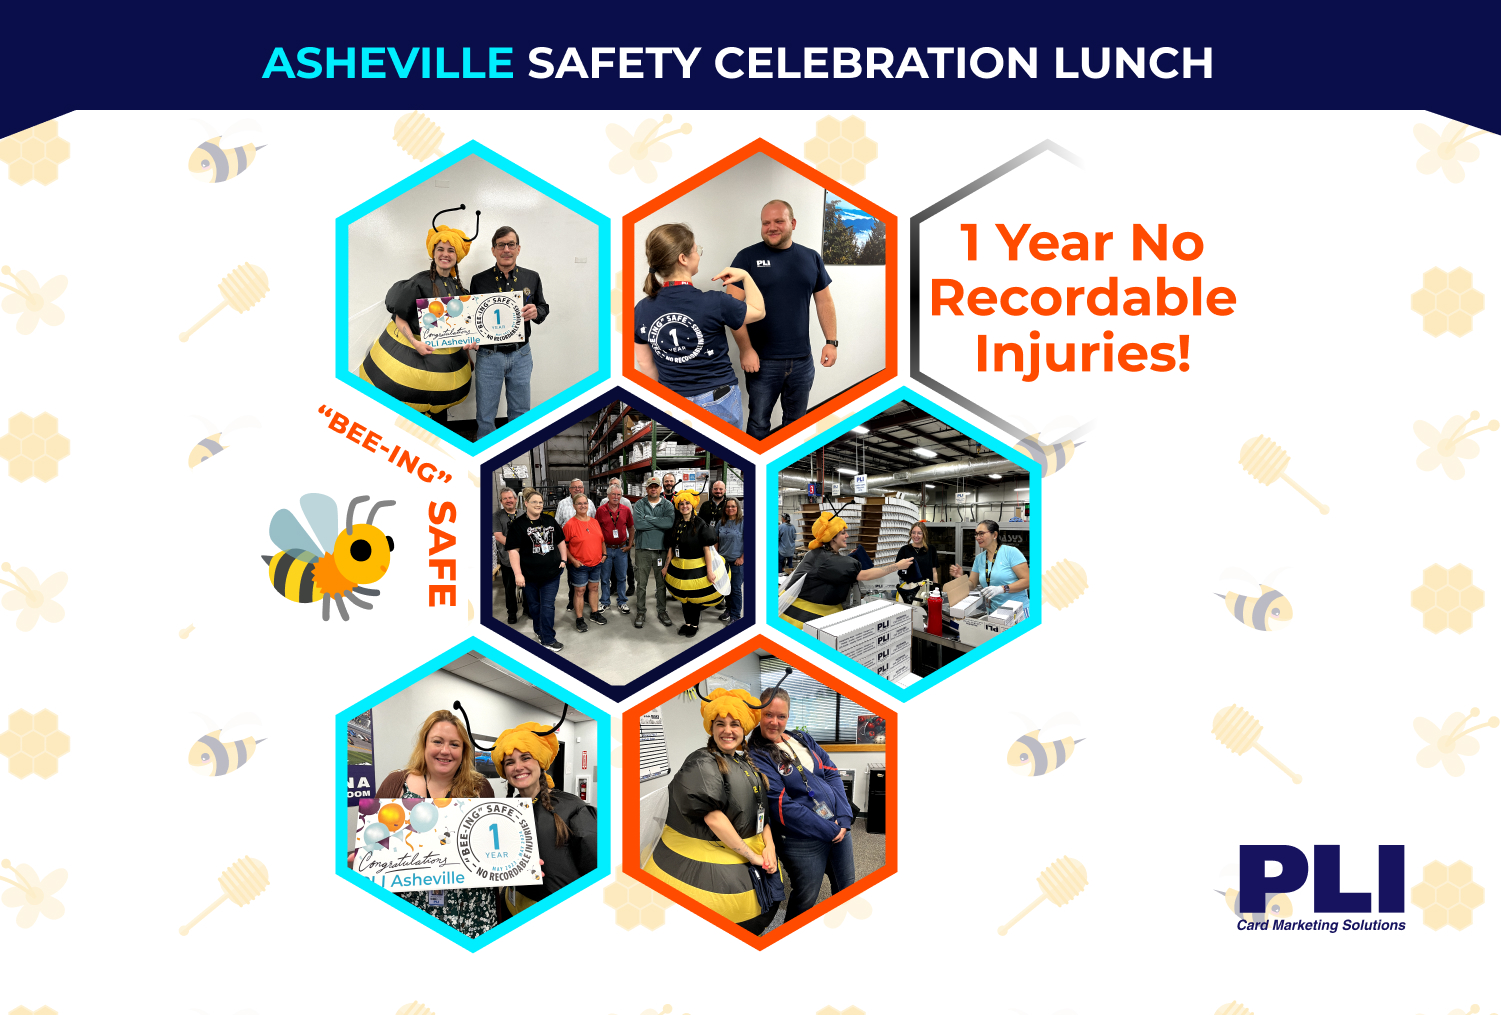 Celebrating a Year of Safety: PLI Asheville’s “Bee-ing Safe” Milestone